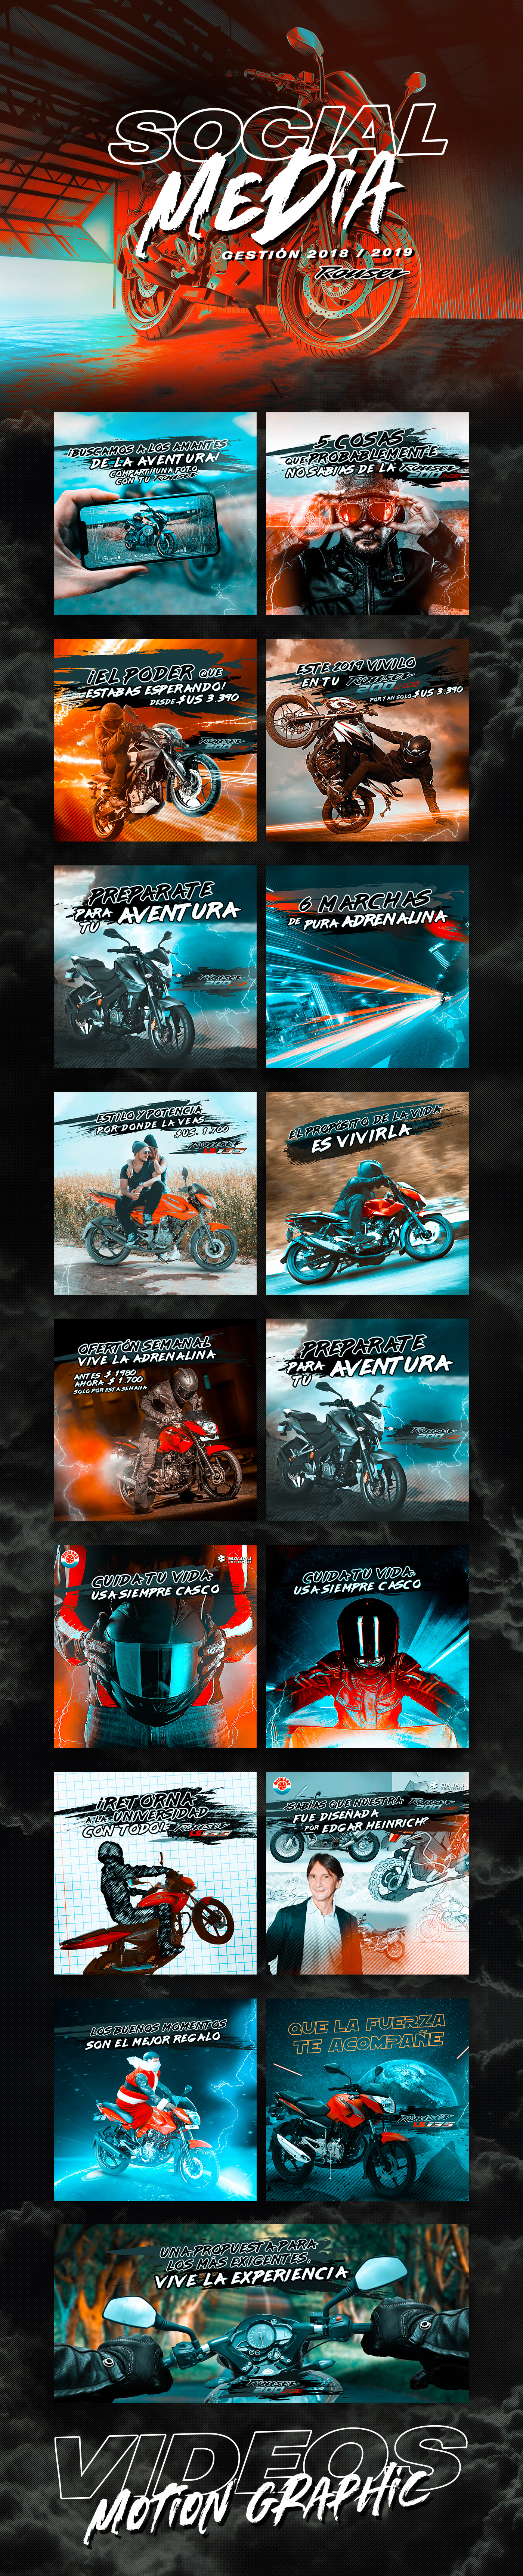 diseño photoshop blender3d rouser bajaj motorcycles Visco Socialmedia Style graphicdesign